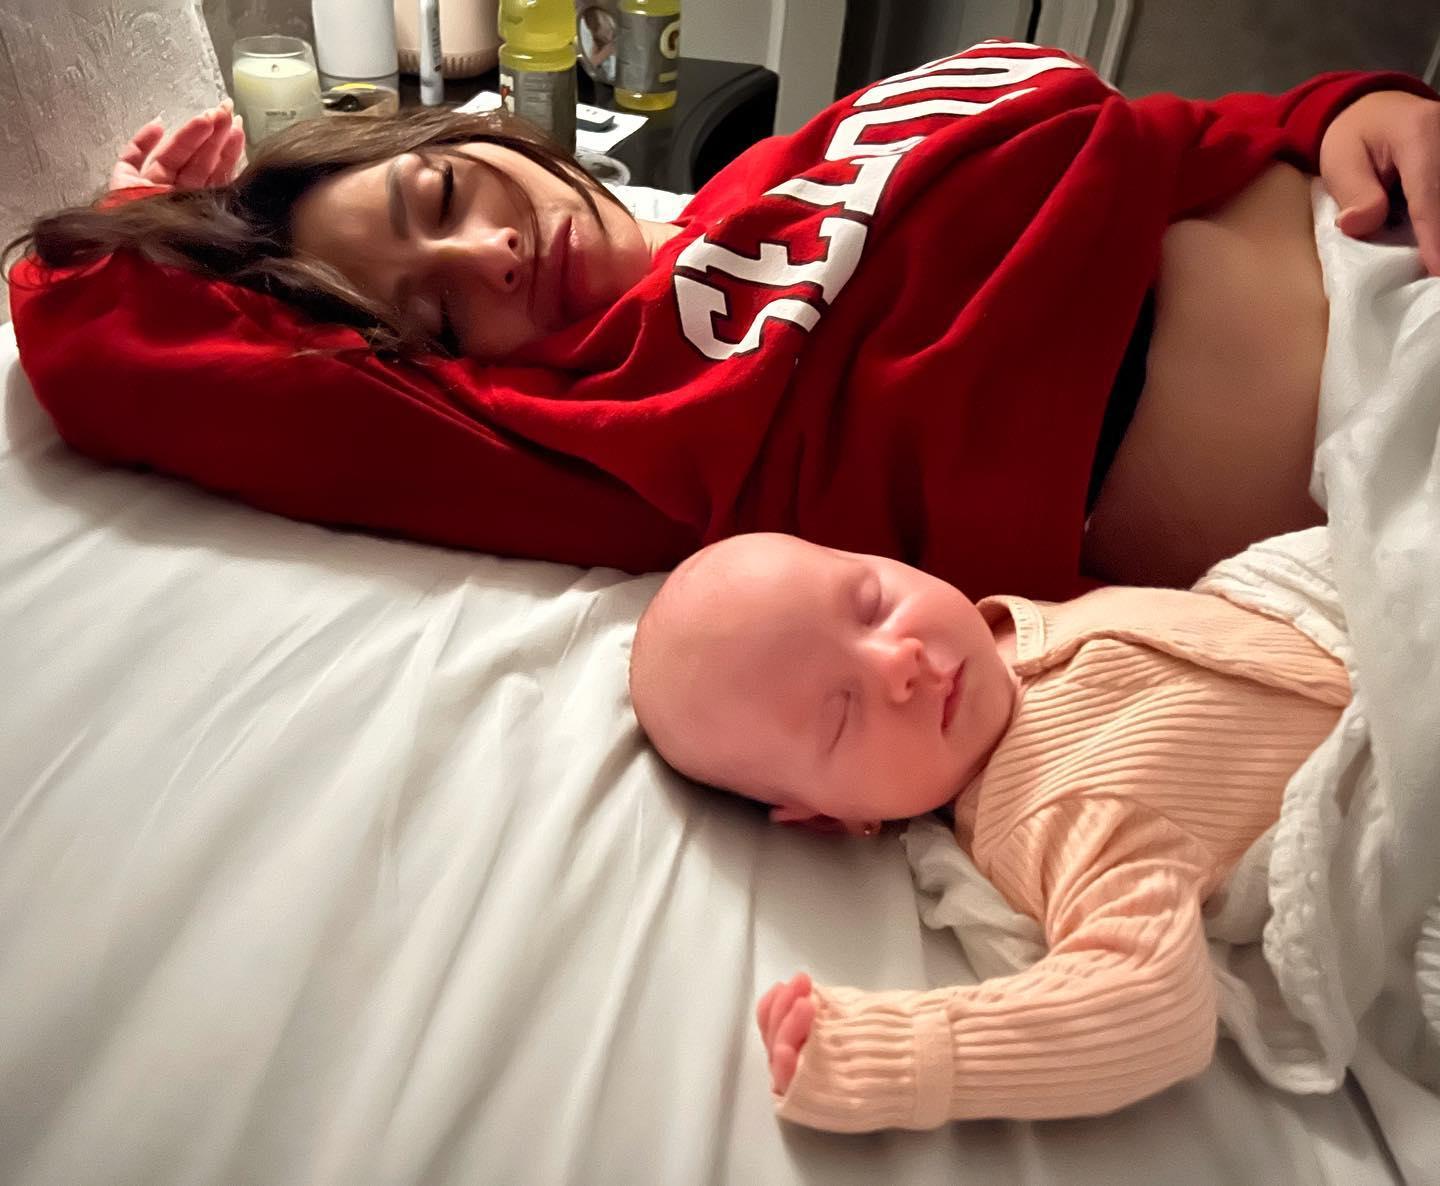 Hilaria sleeping with her newborn daughter